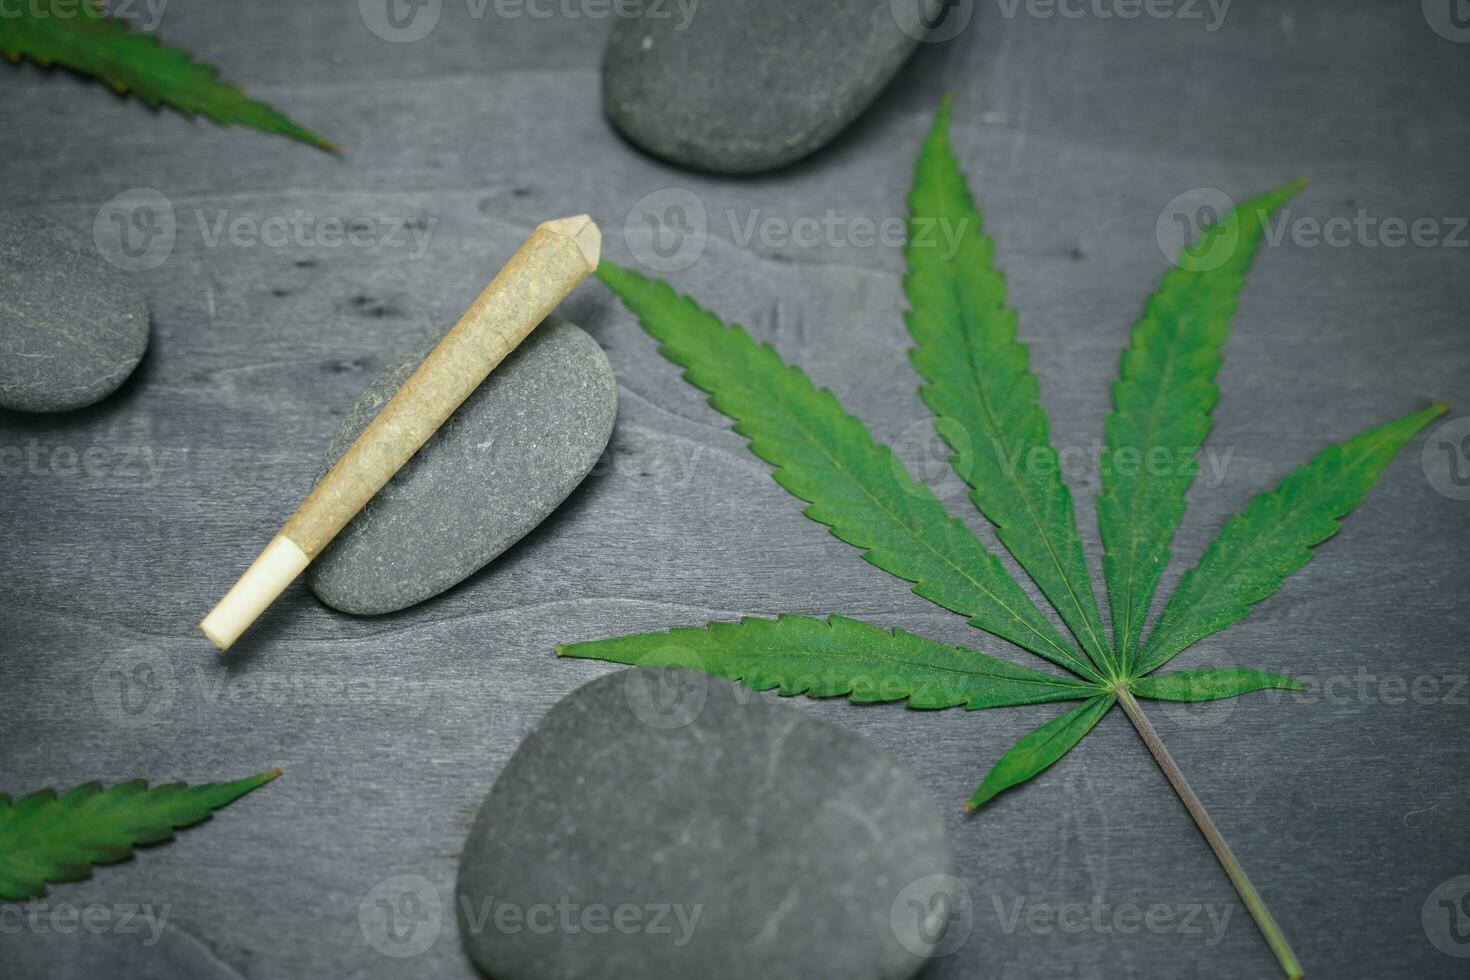 CBD medico marijuana e canapa le foglie. medico cannabis. foto